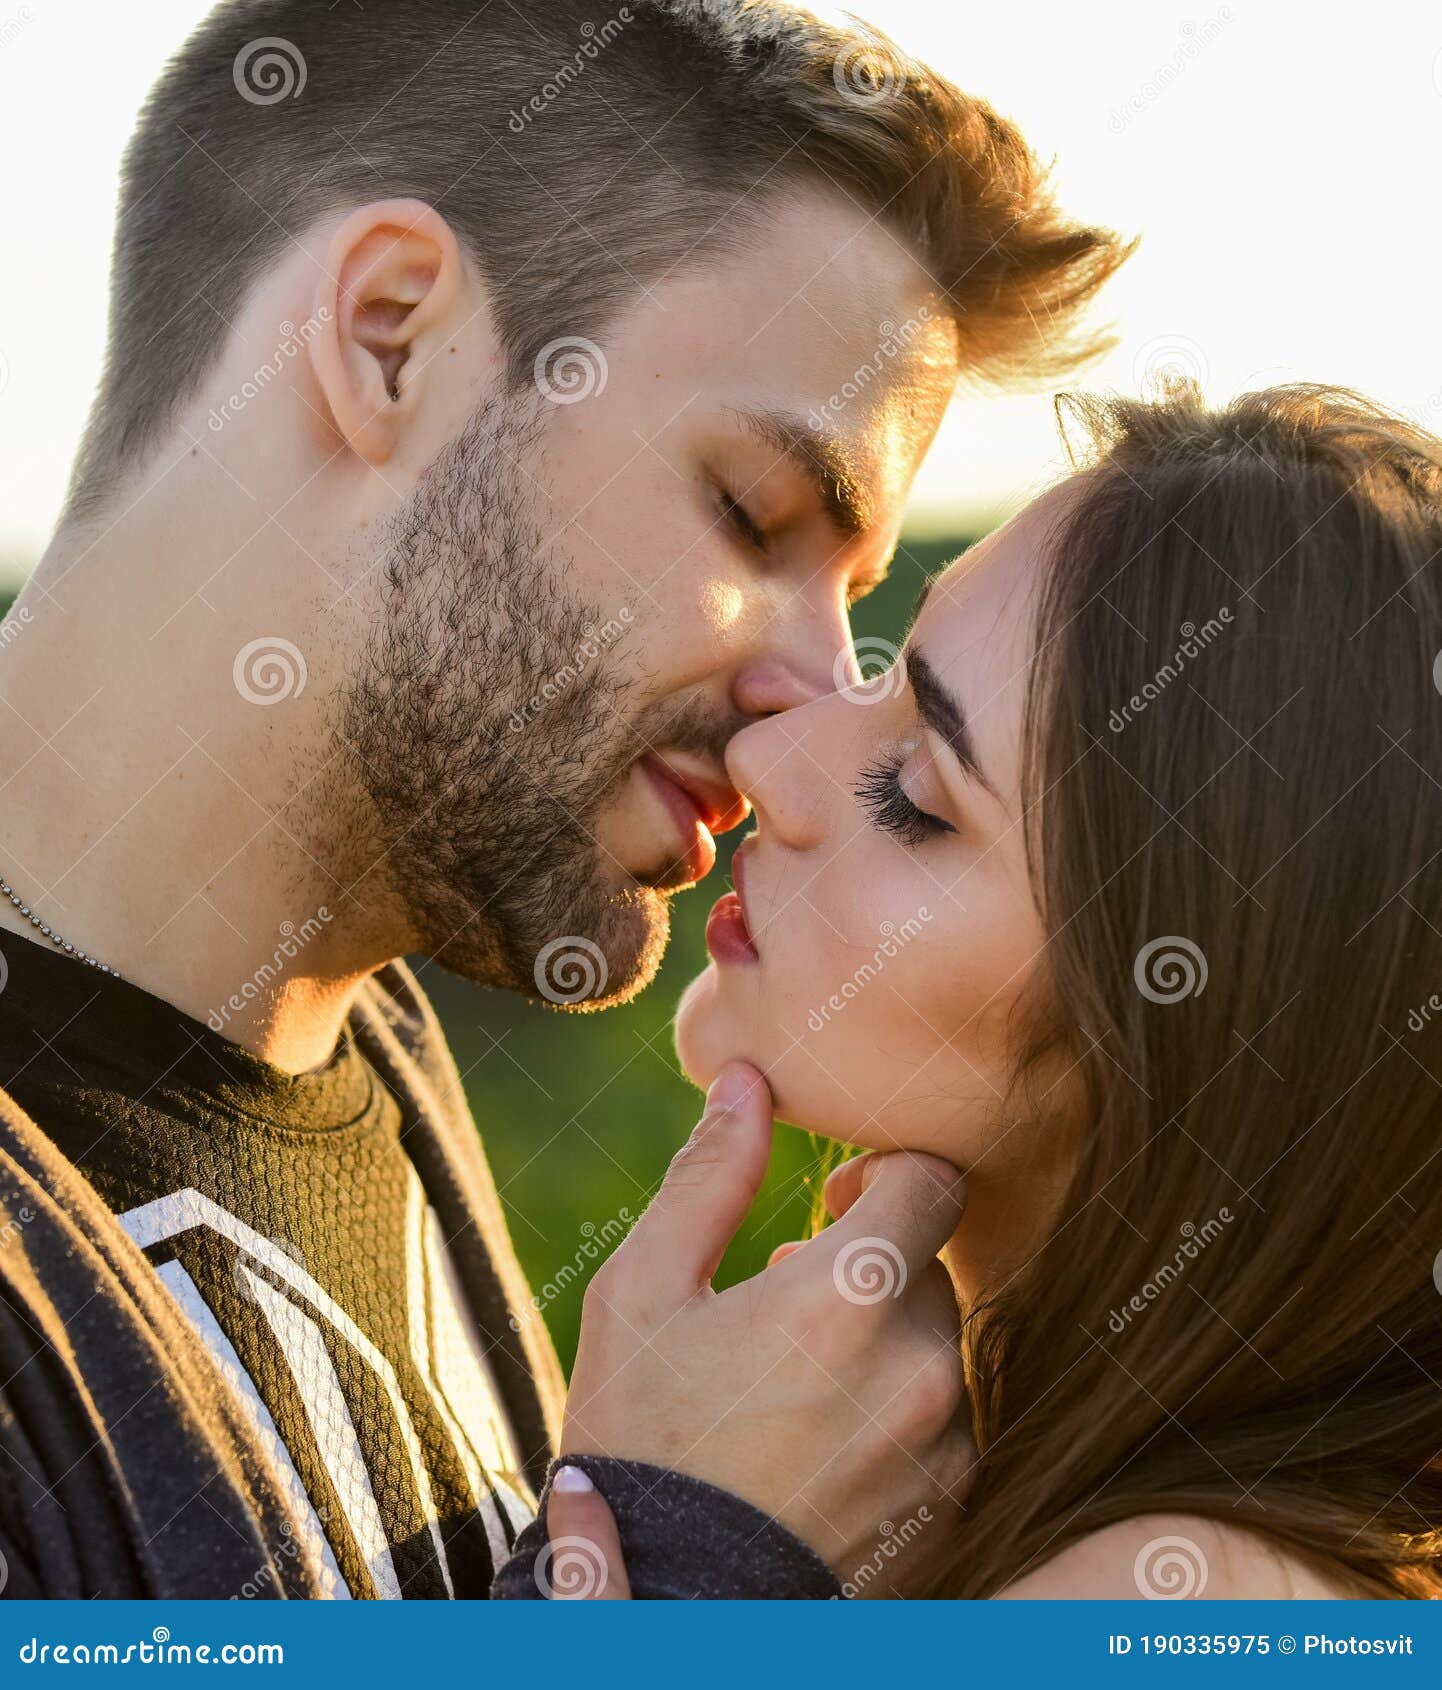 Hot Sexy Girl Kiss